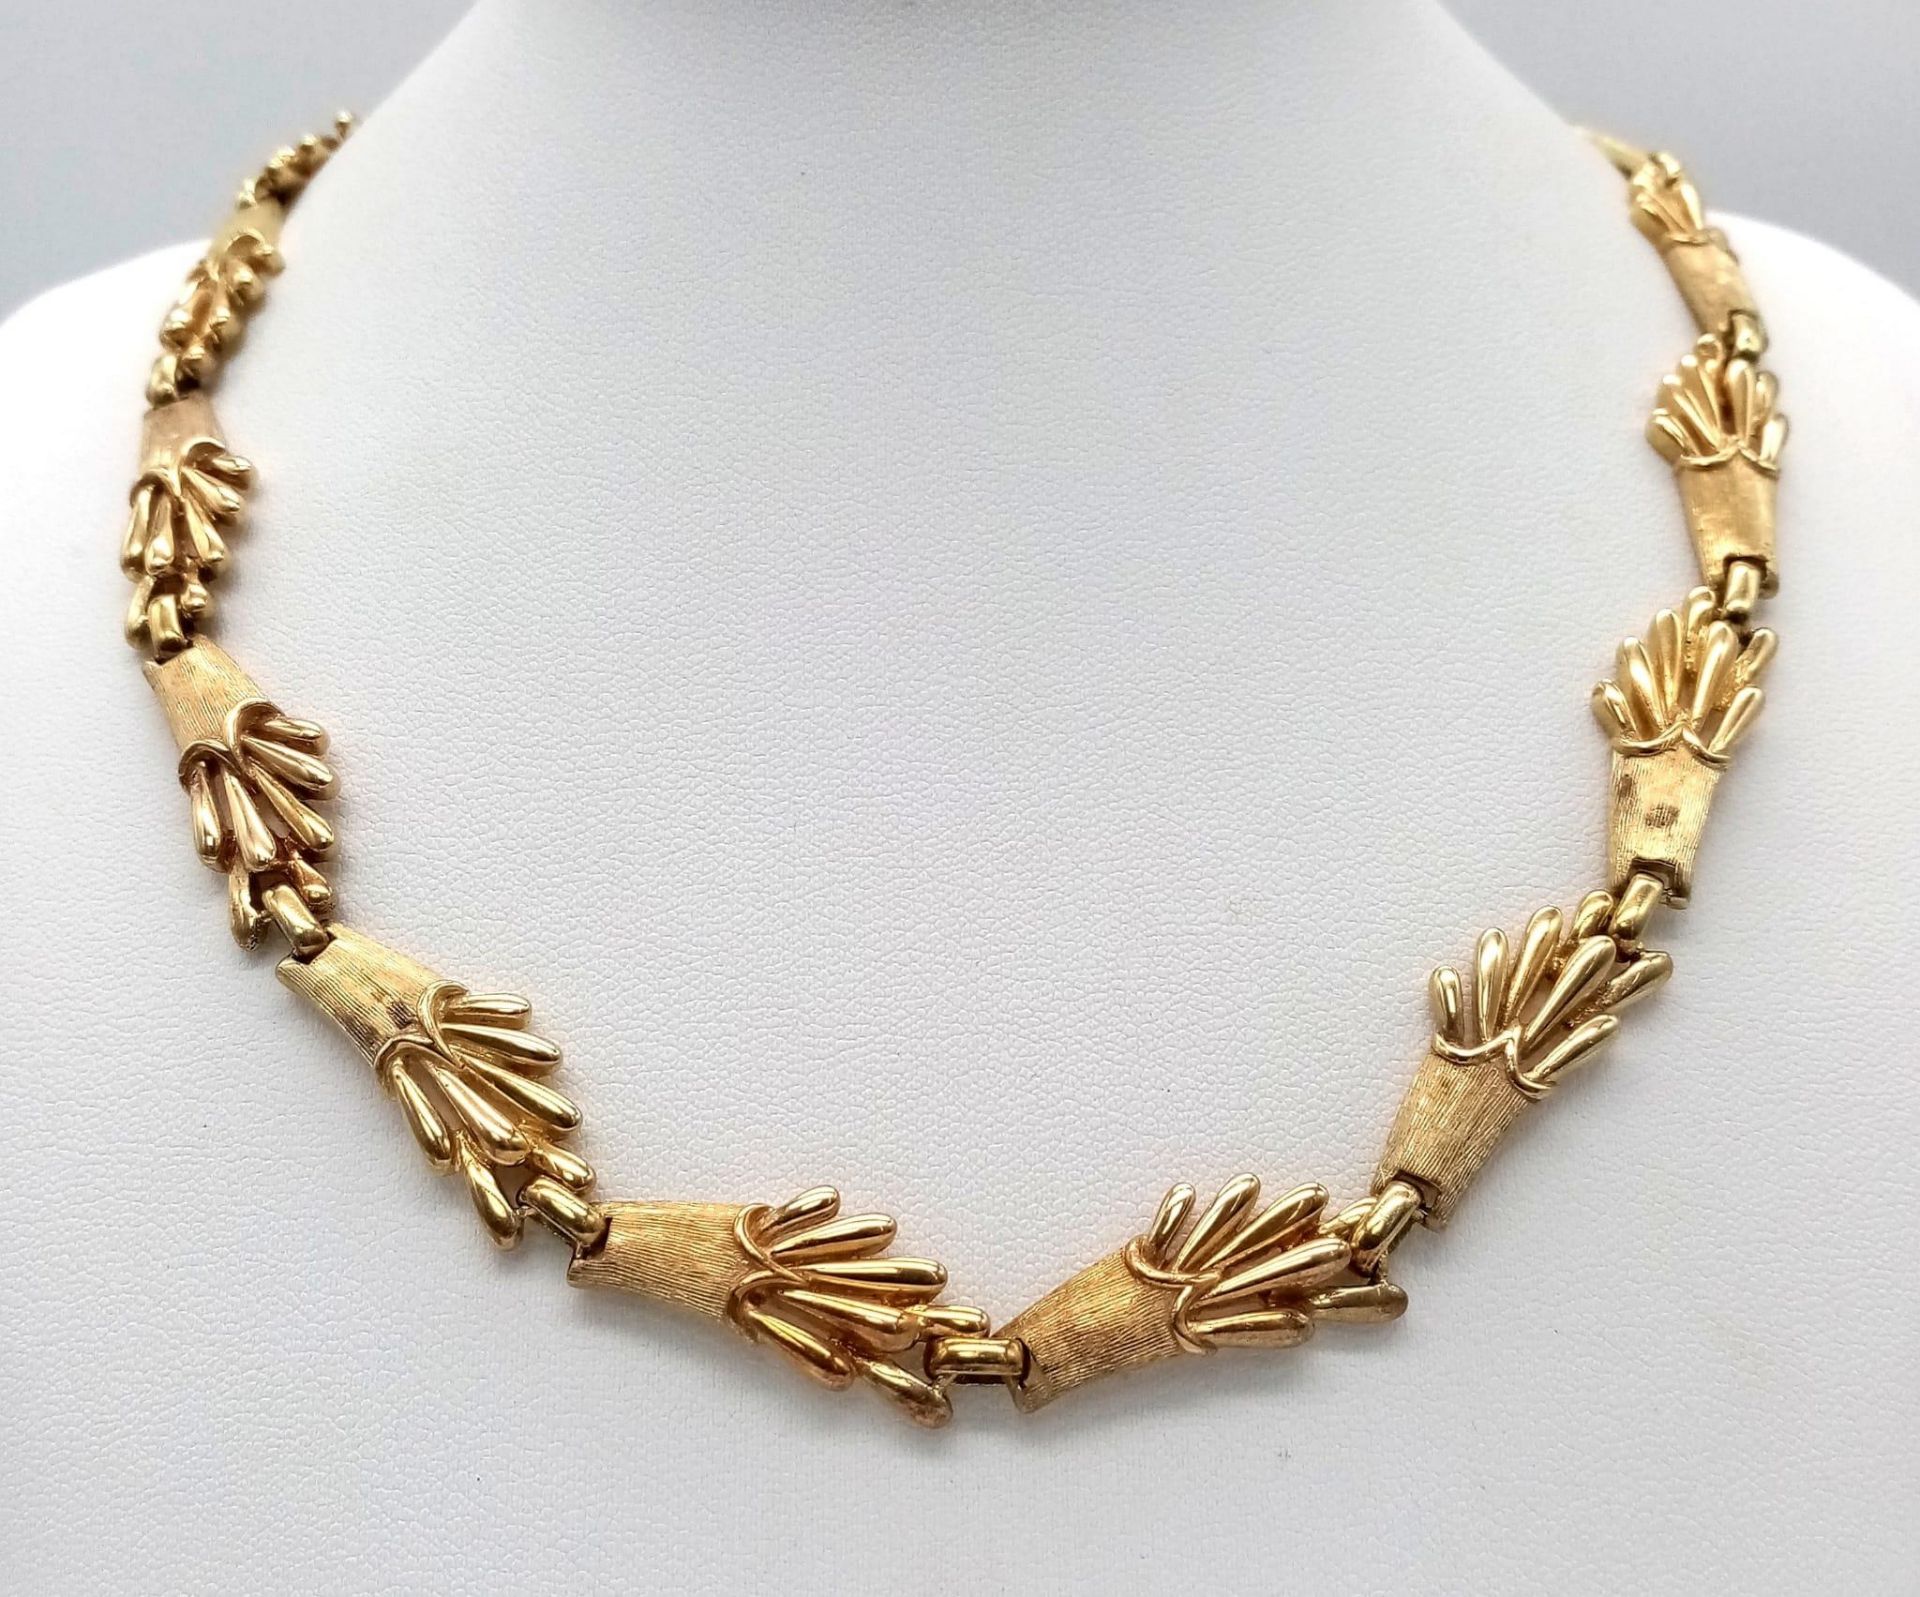 A Vintage 18K Yellow Gold Substantial Harvest-Burst Link Necklace. 44cm length. 66.37g weight.